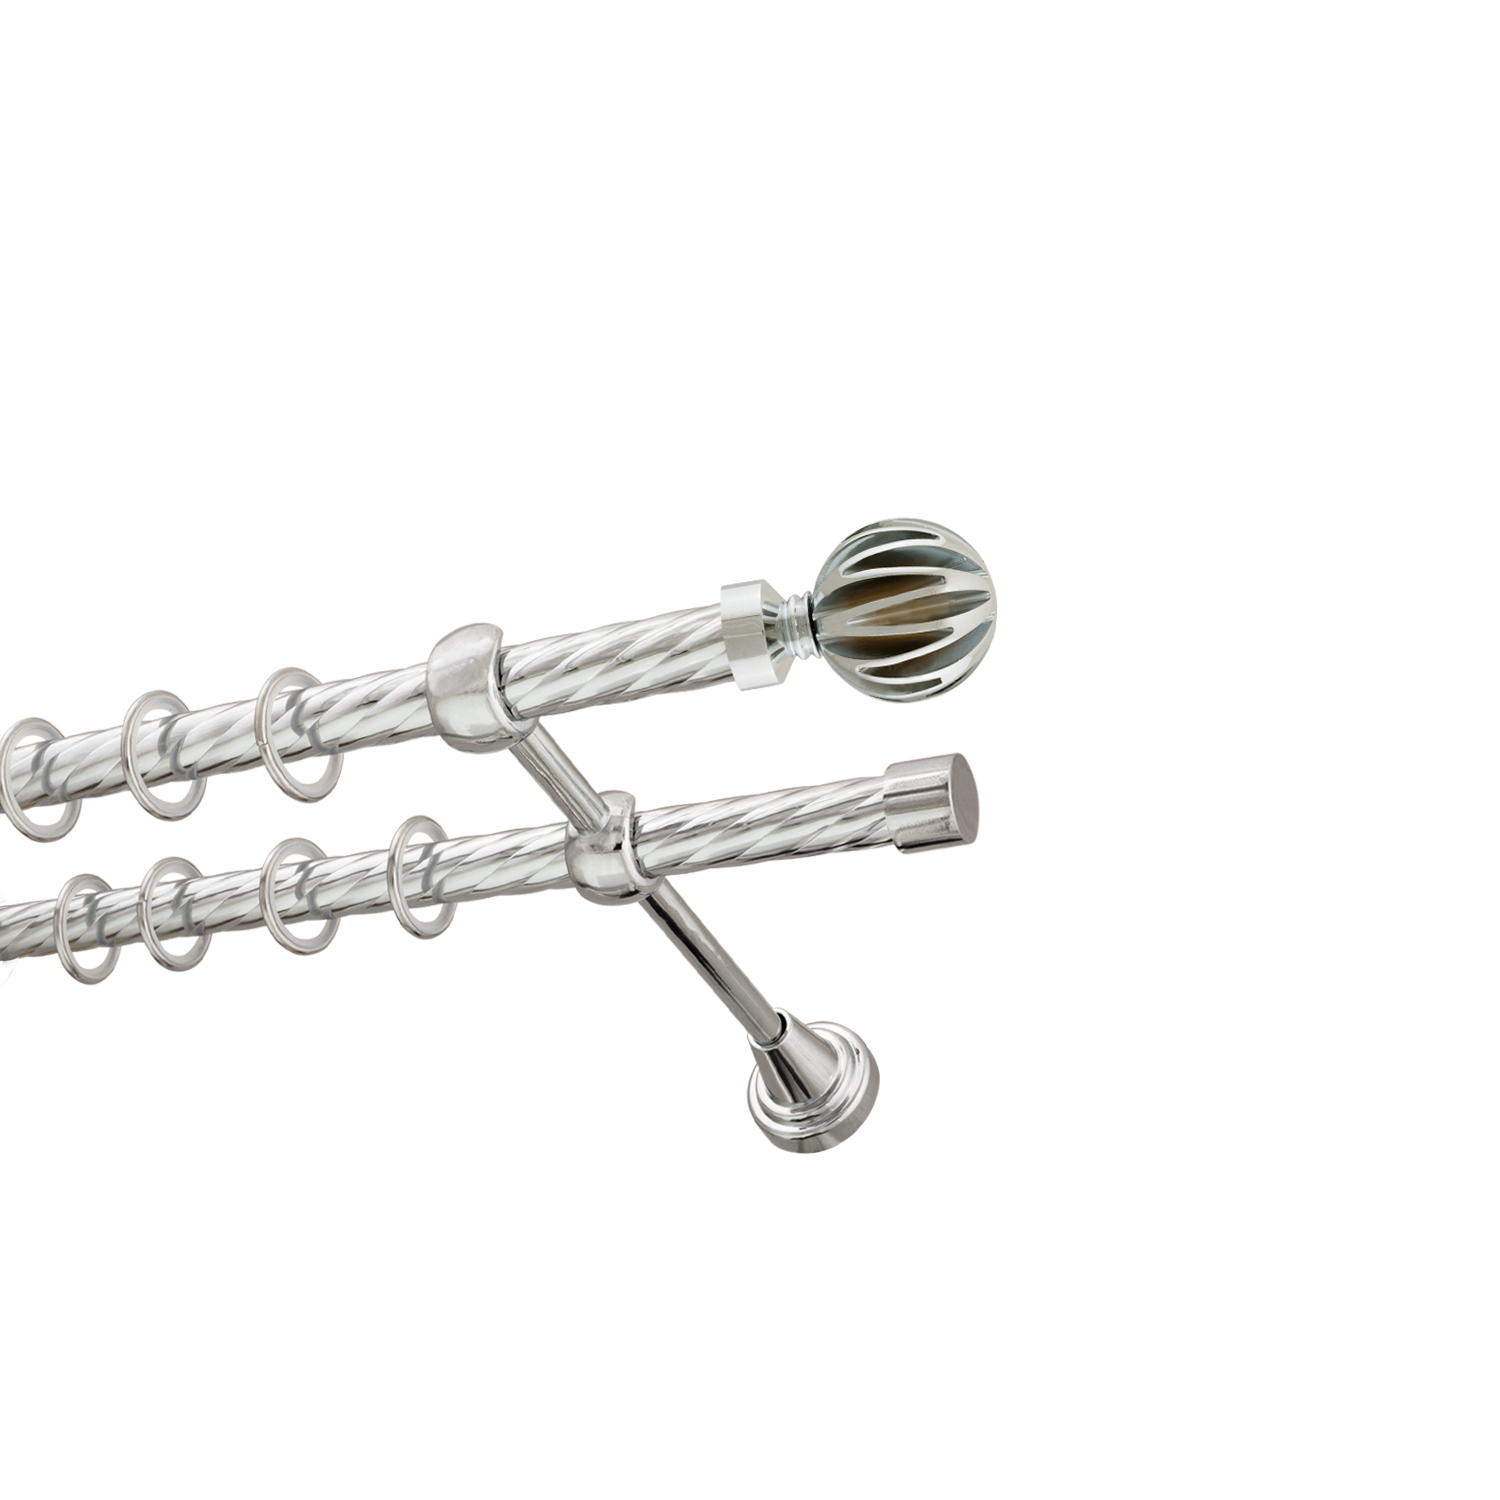 Металлический карниз для штор Шафран, двухрядный 16/16 мм, серебро, витая штанга, длина 160 см - фото Wikidecor.ru